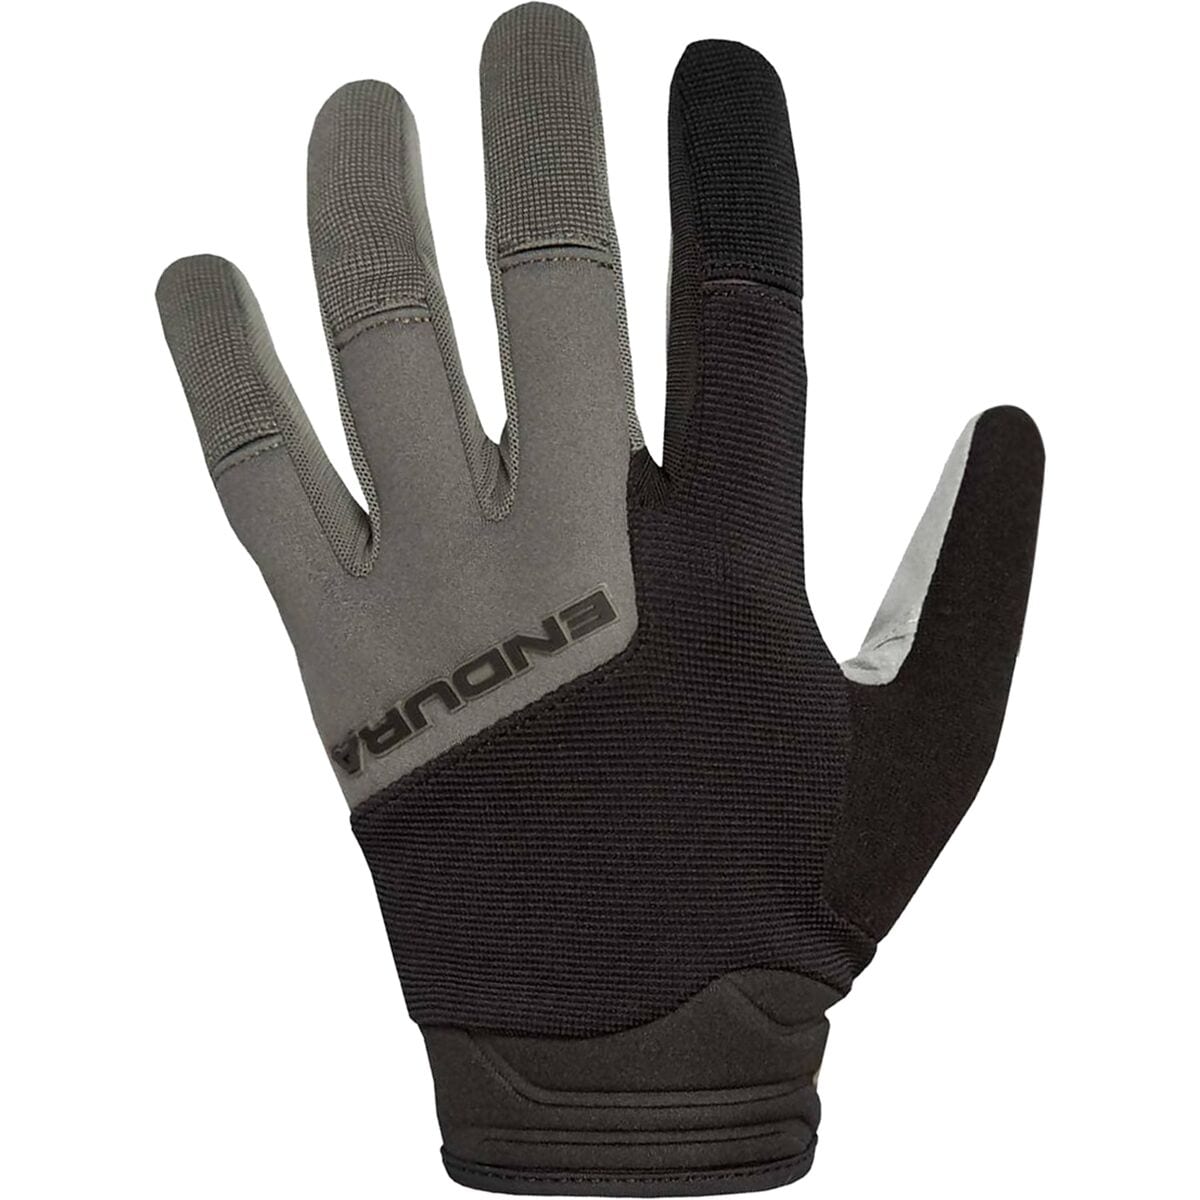 Endura Hummvee Plus II Glove - Men's